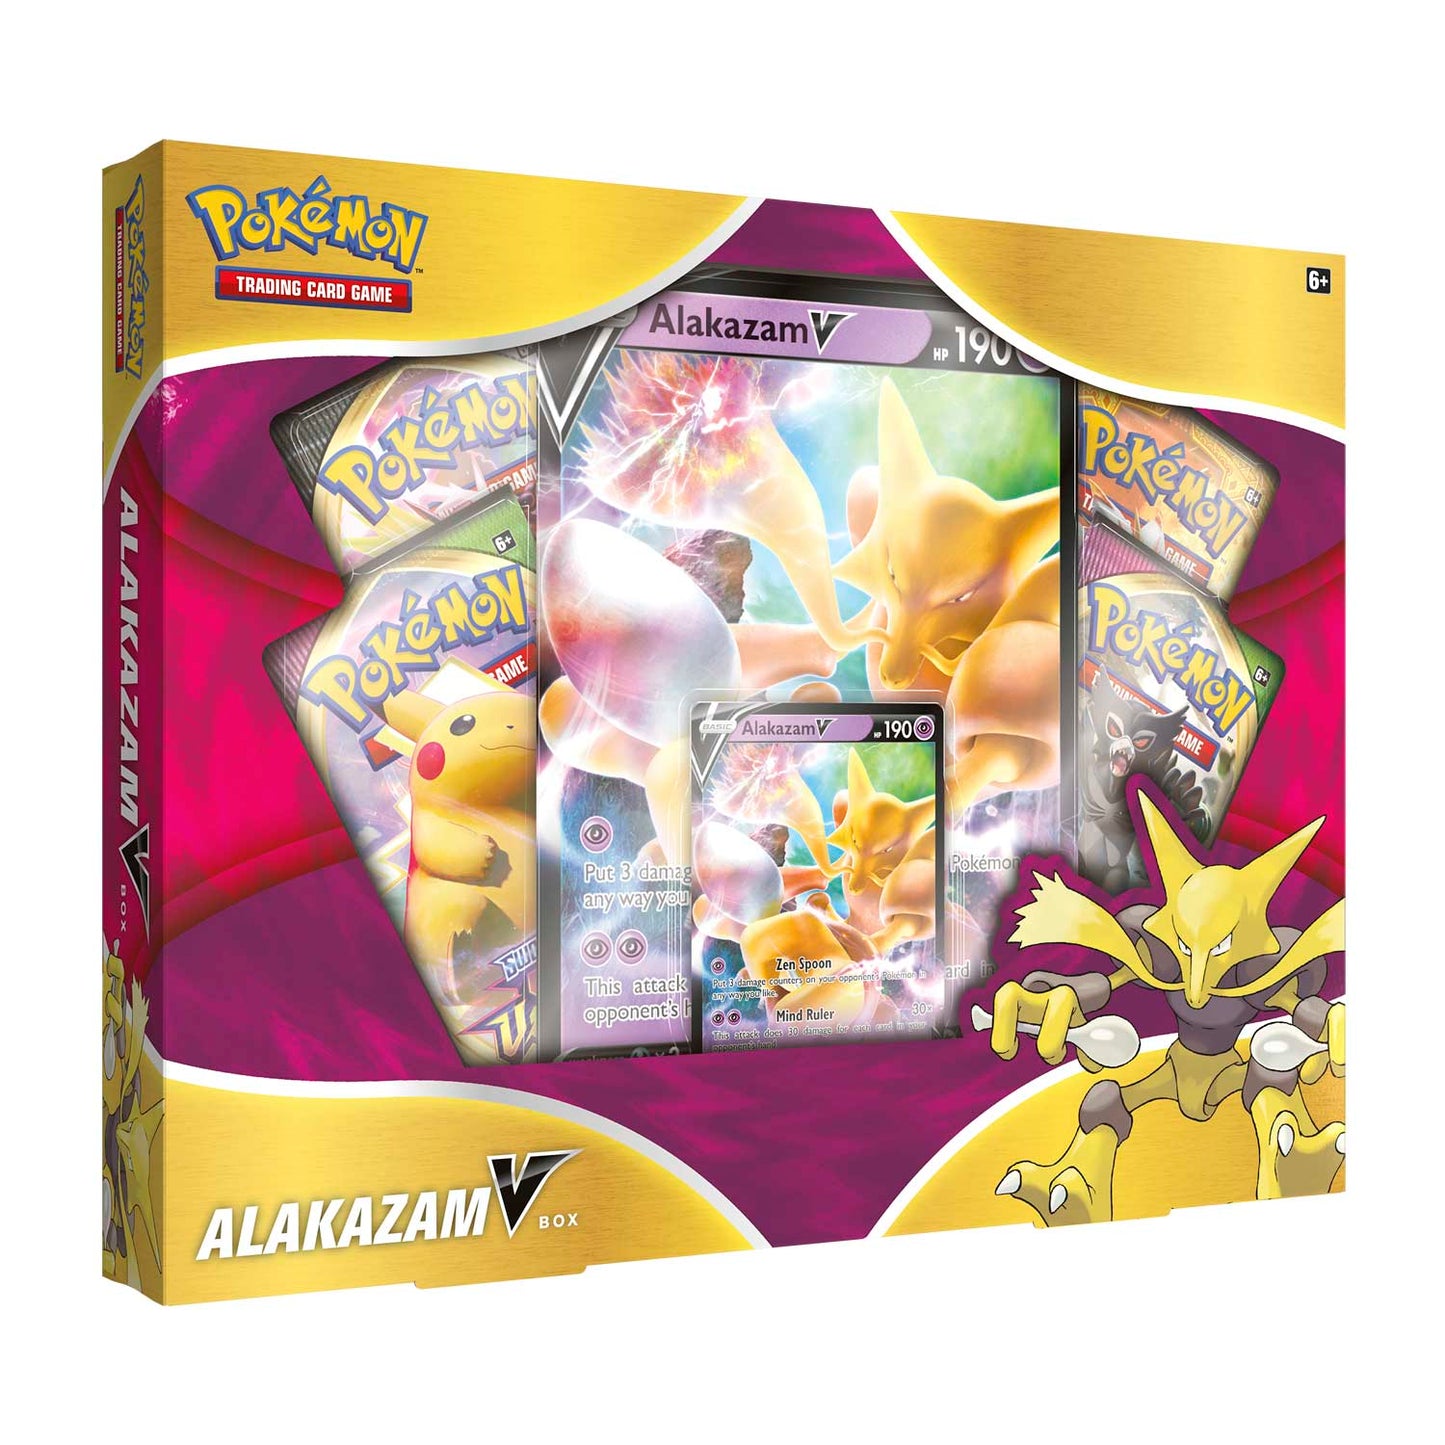 Pokémon TCG: Alakazam V Box - 4 Pokémon TCG booster packs